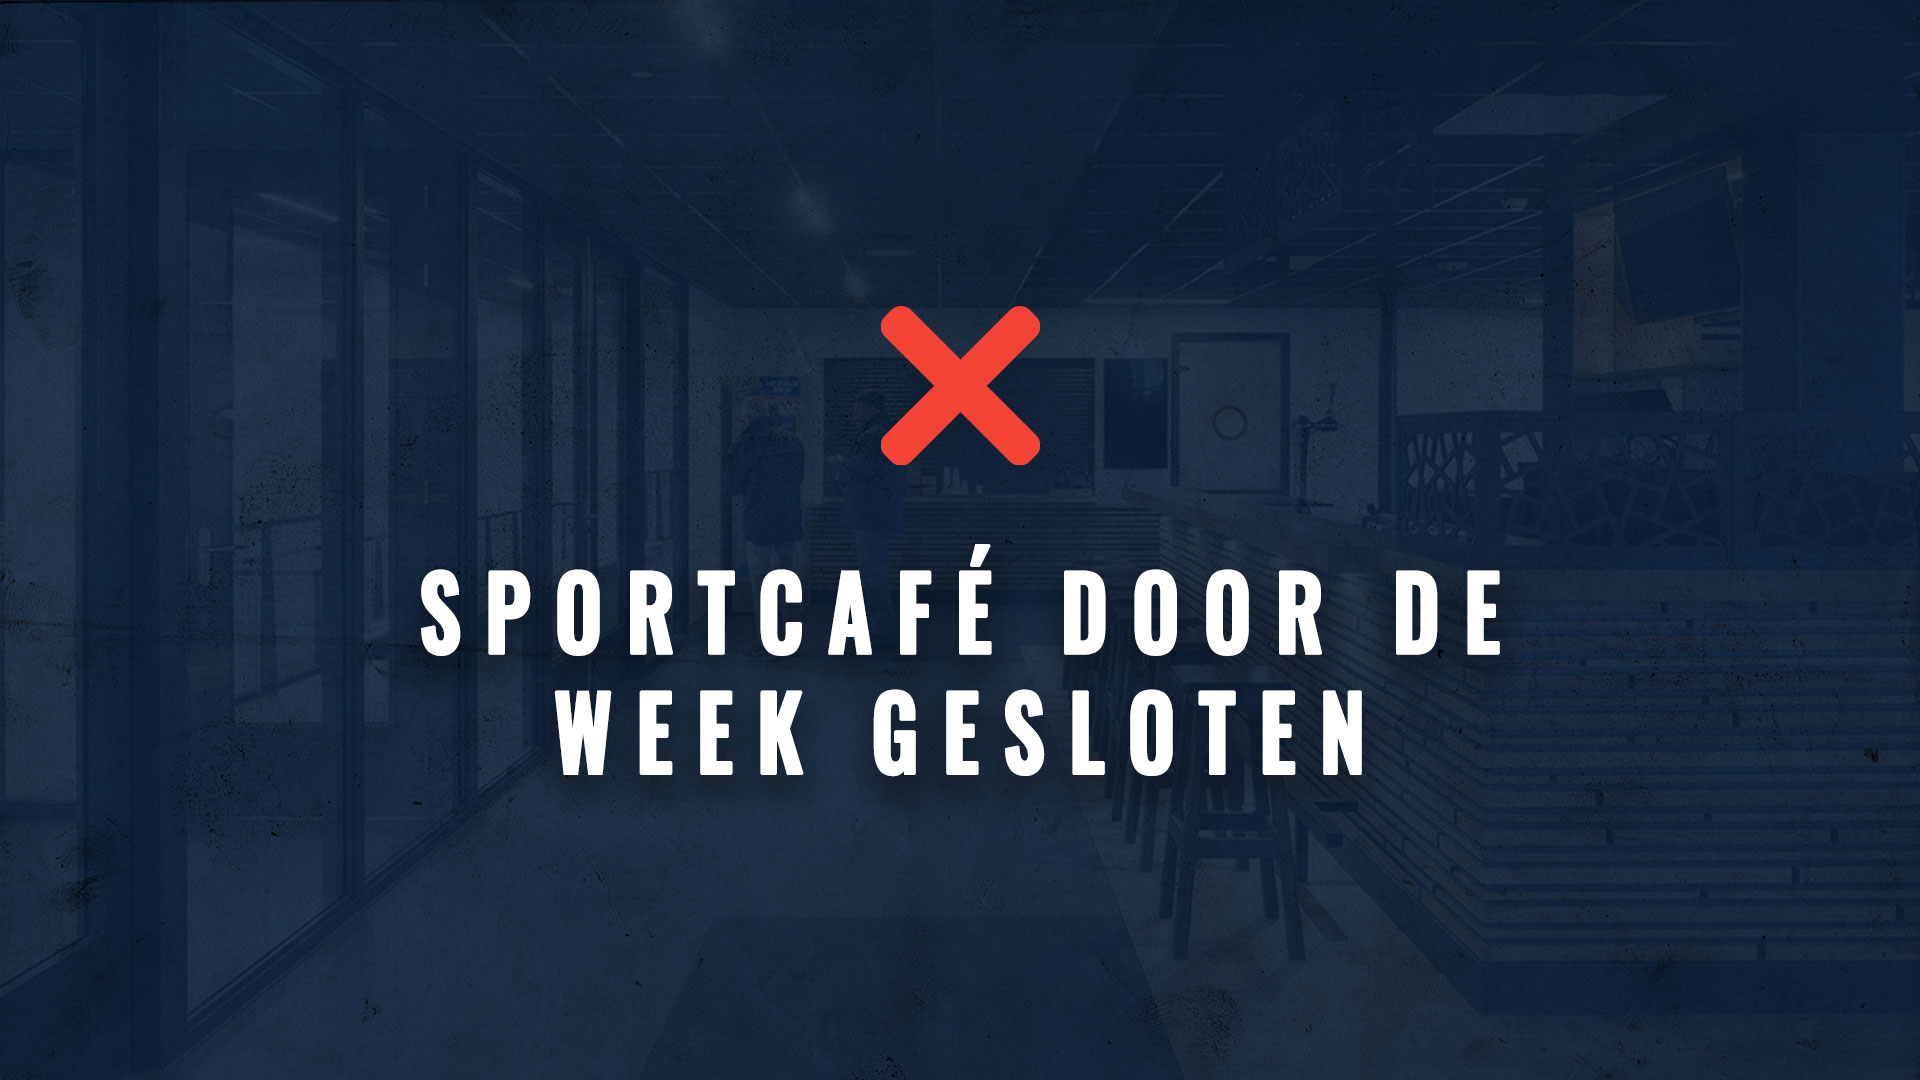 Sportcafé deze week gesloten